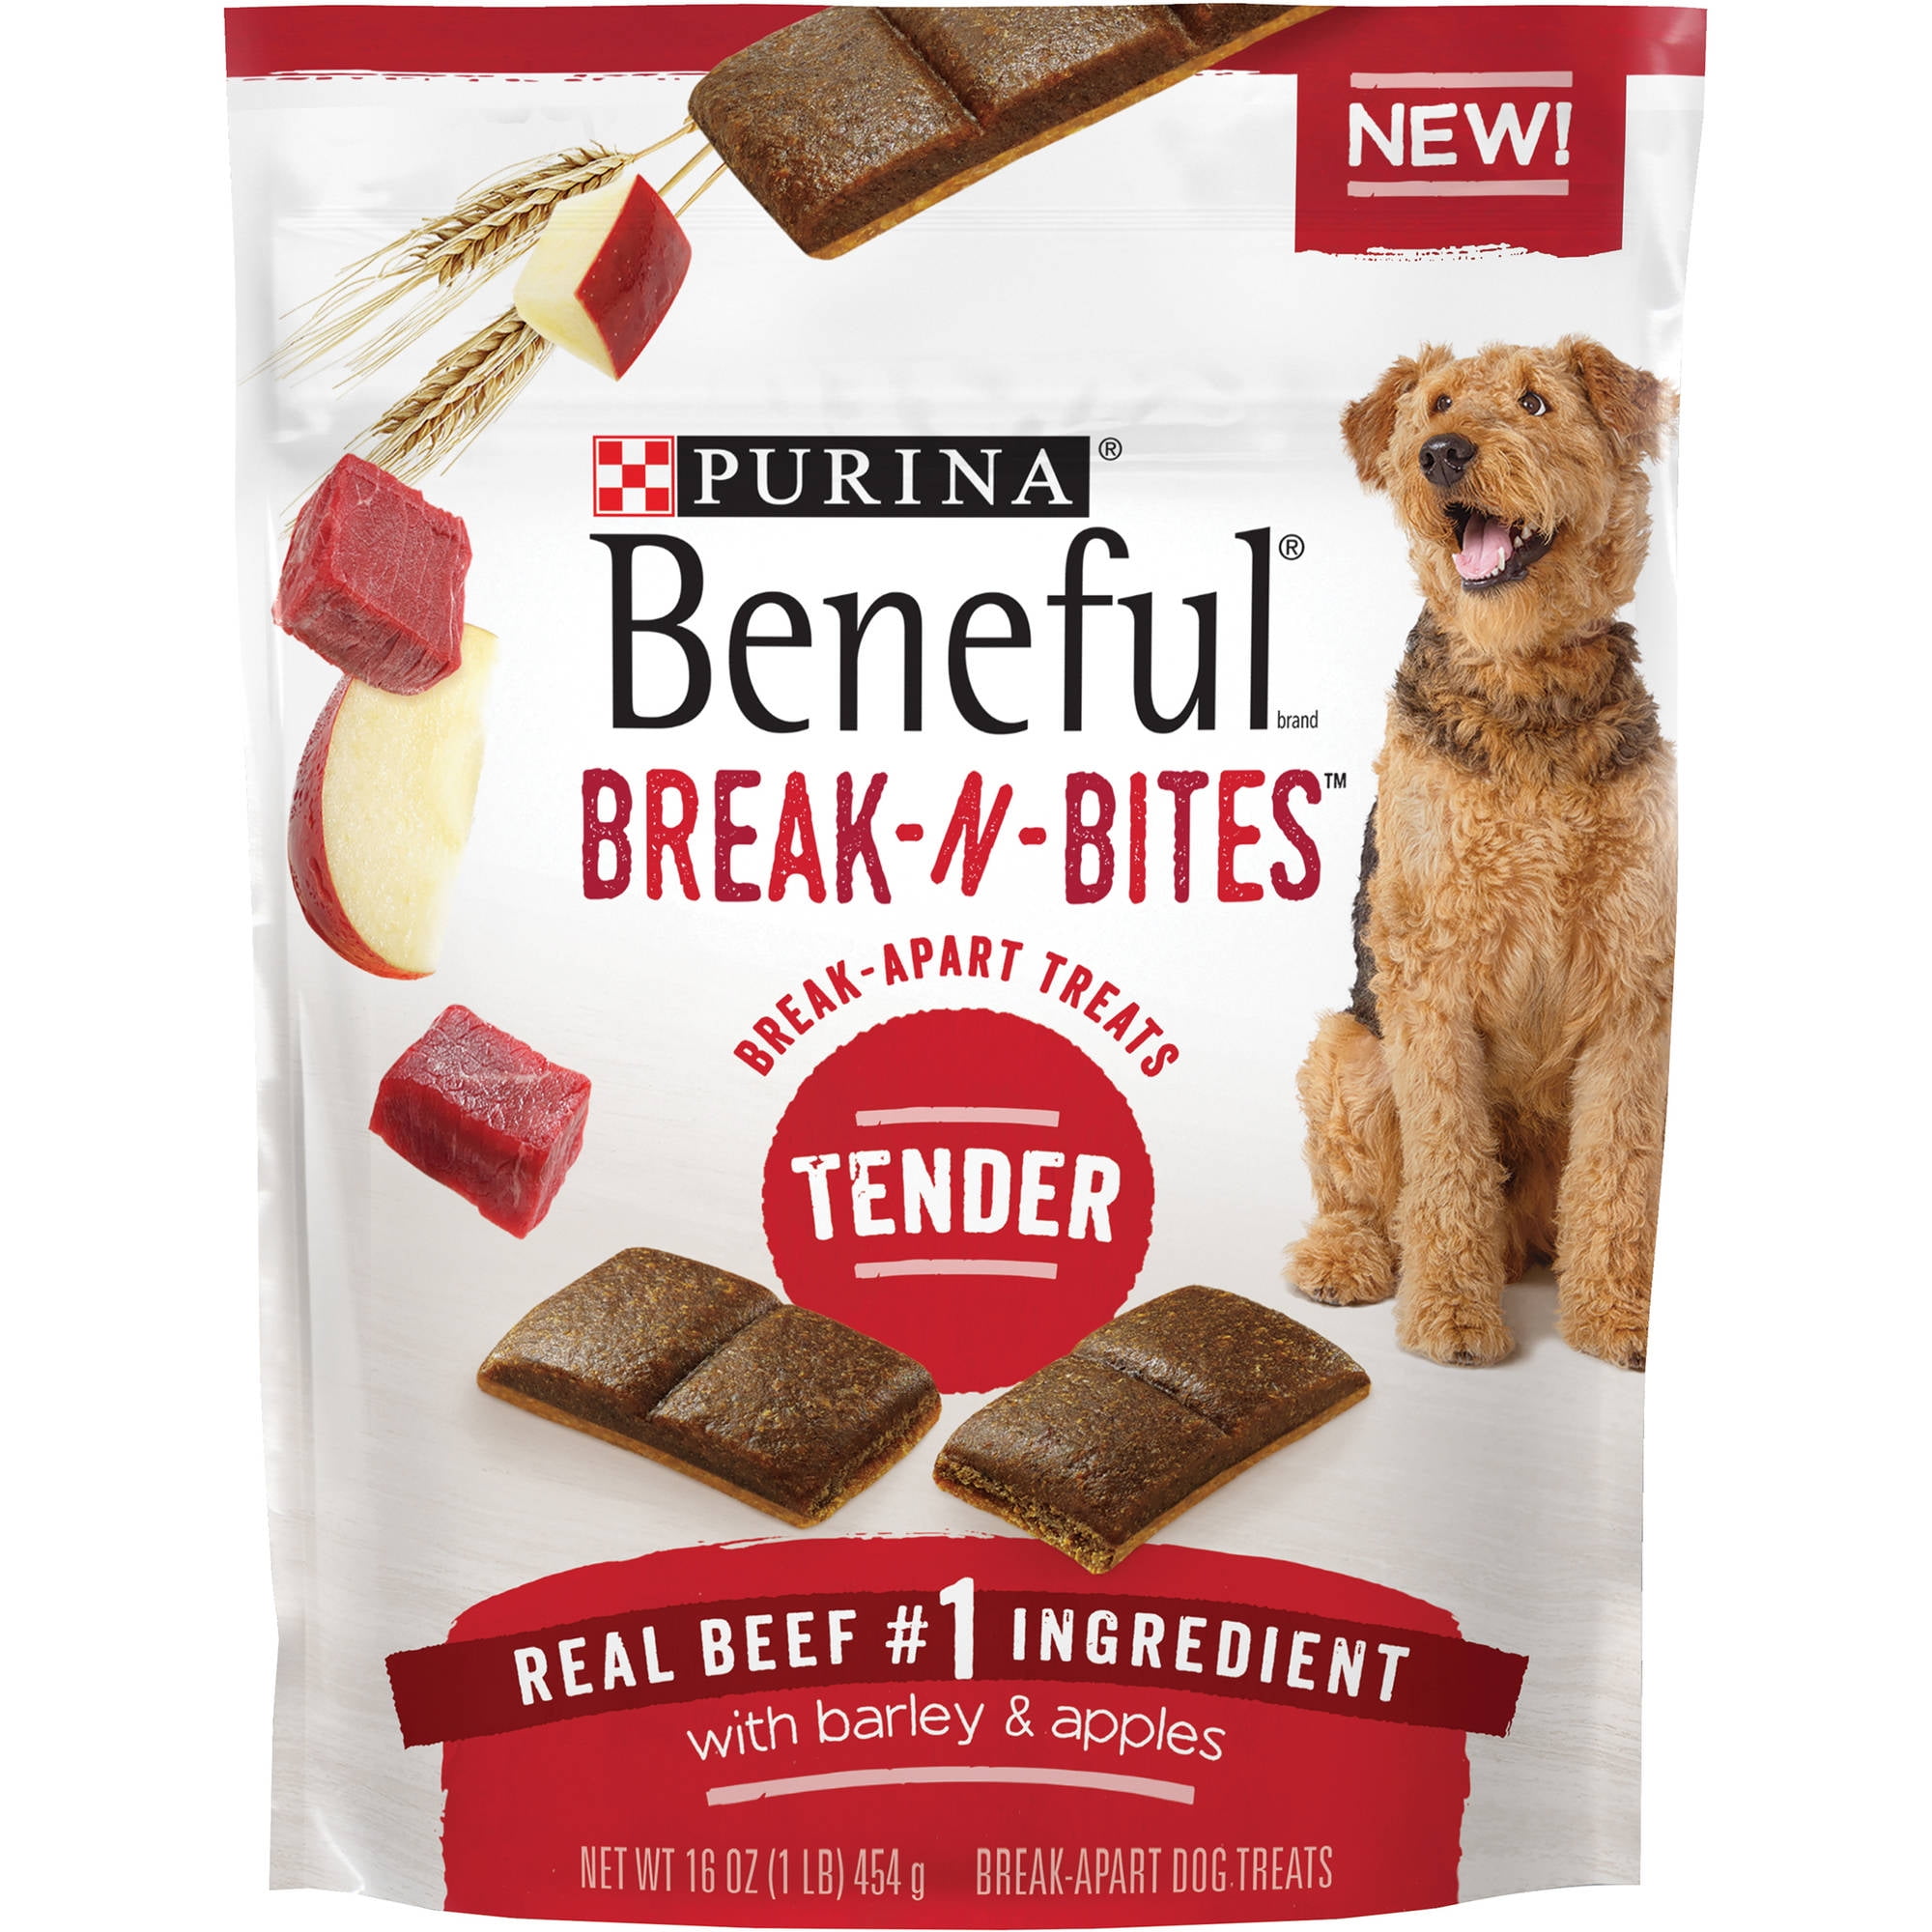 Purina Beneful Break-N-Bites Tender 